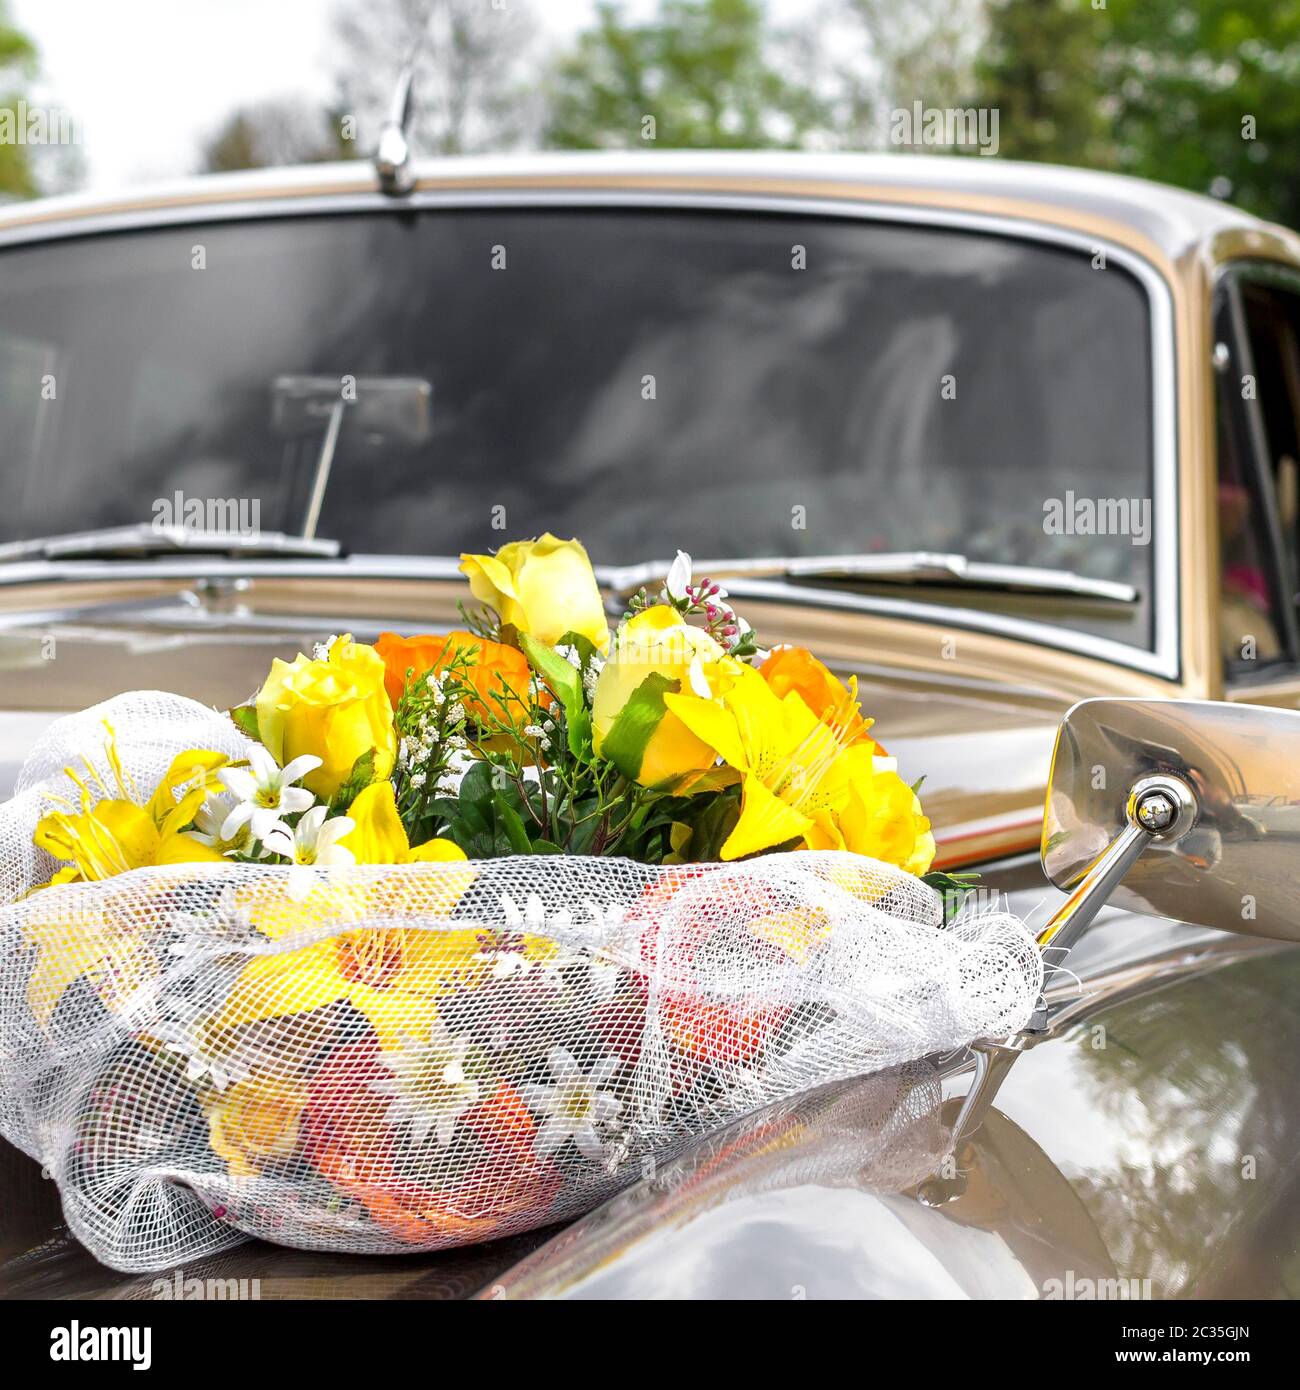 https://c8.alamy.com/comp/2C35GJN/wedding-car-decoration-2C35GJN.jpg